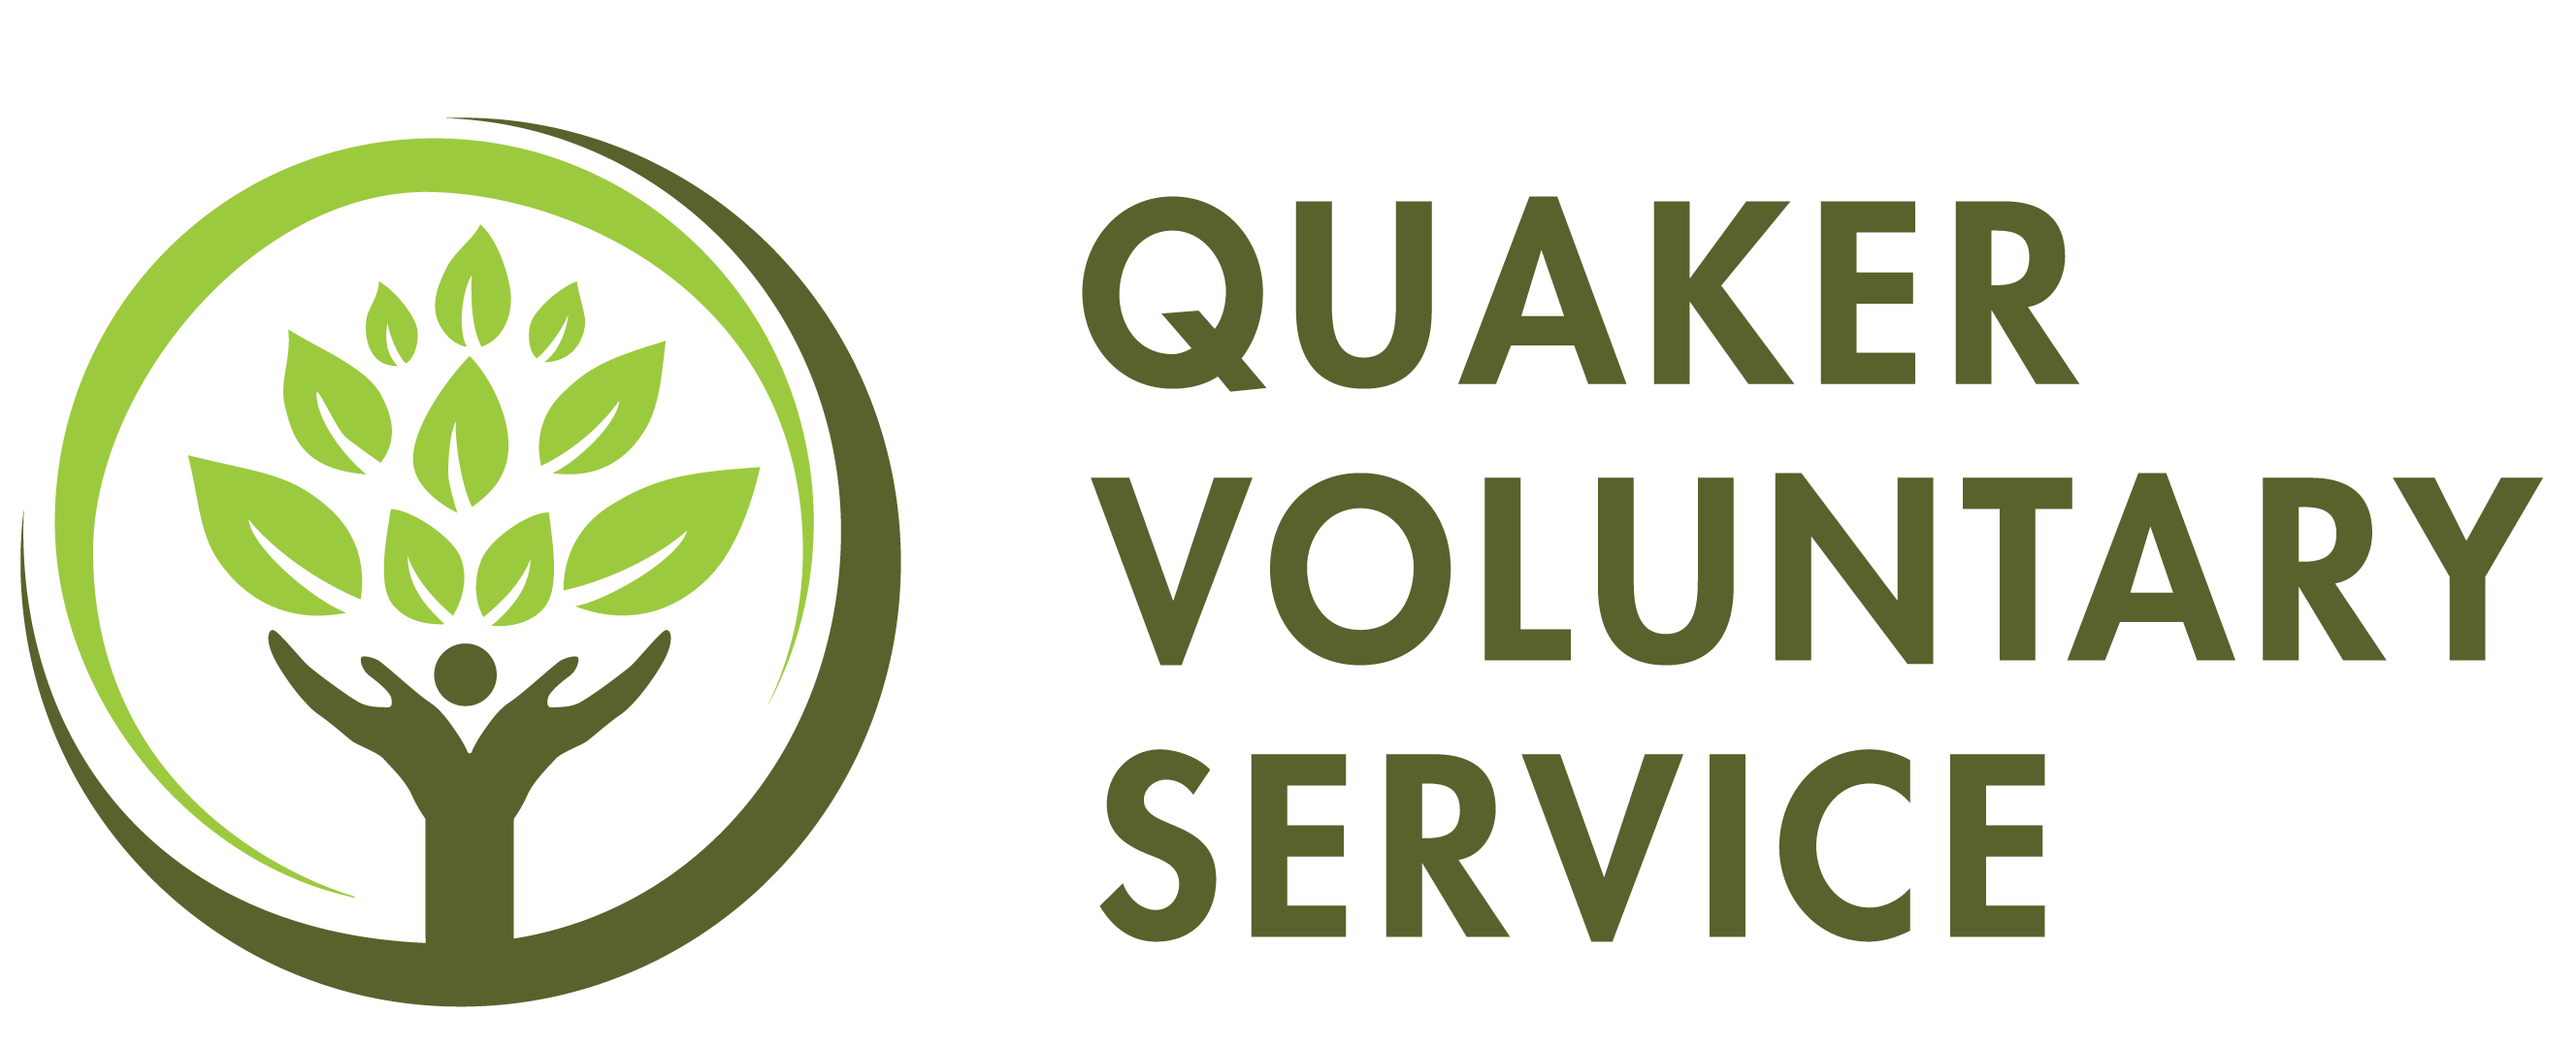 Epistle from the Quaker Volunteer Service Consultation